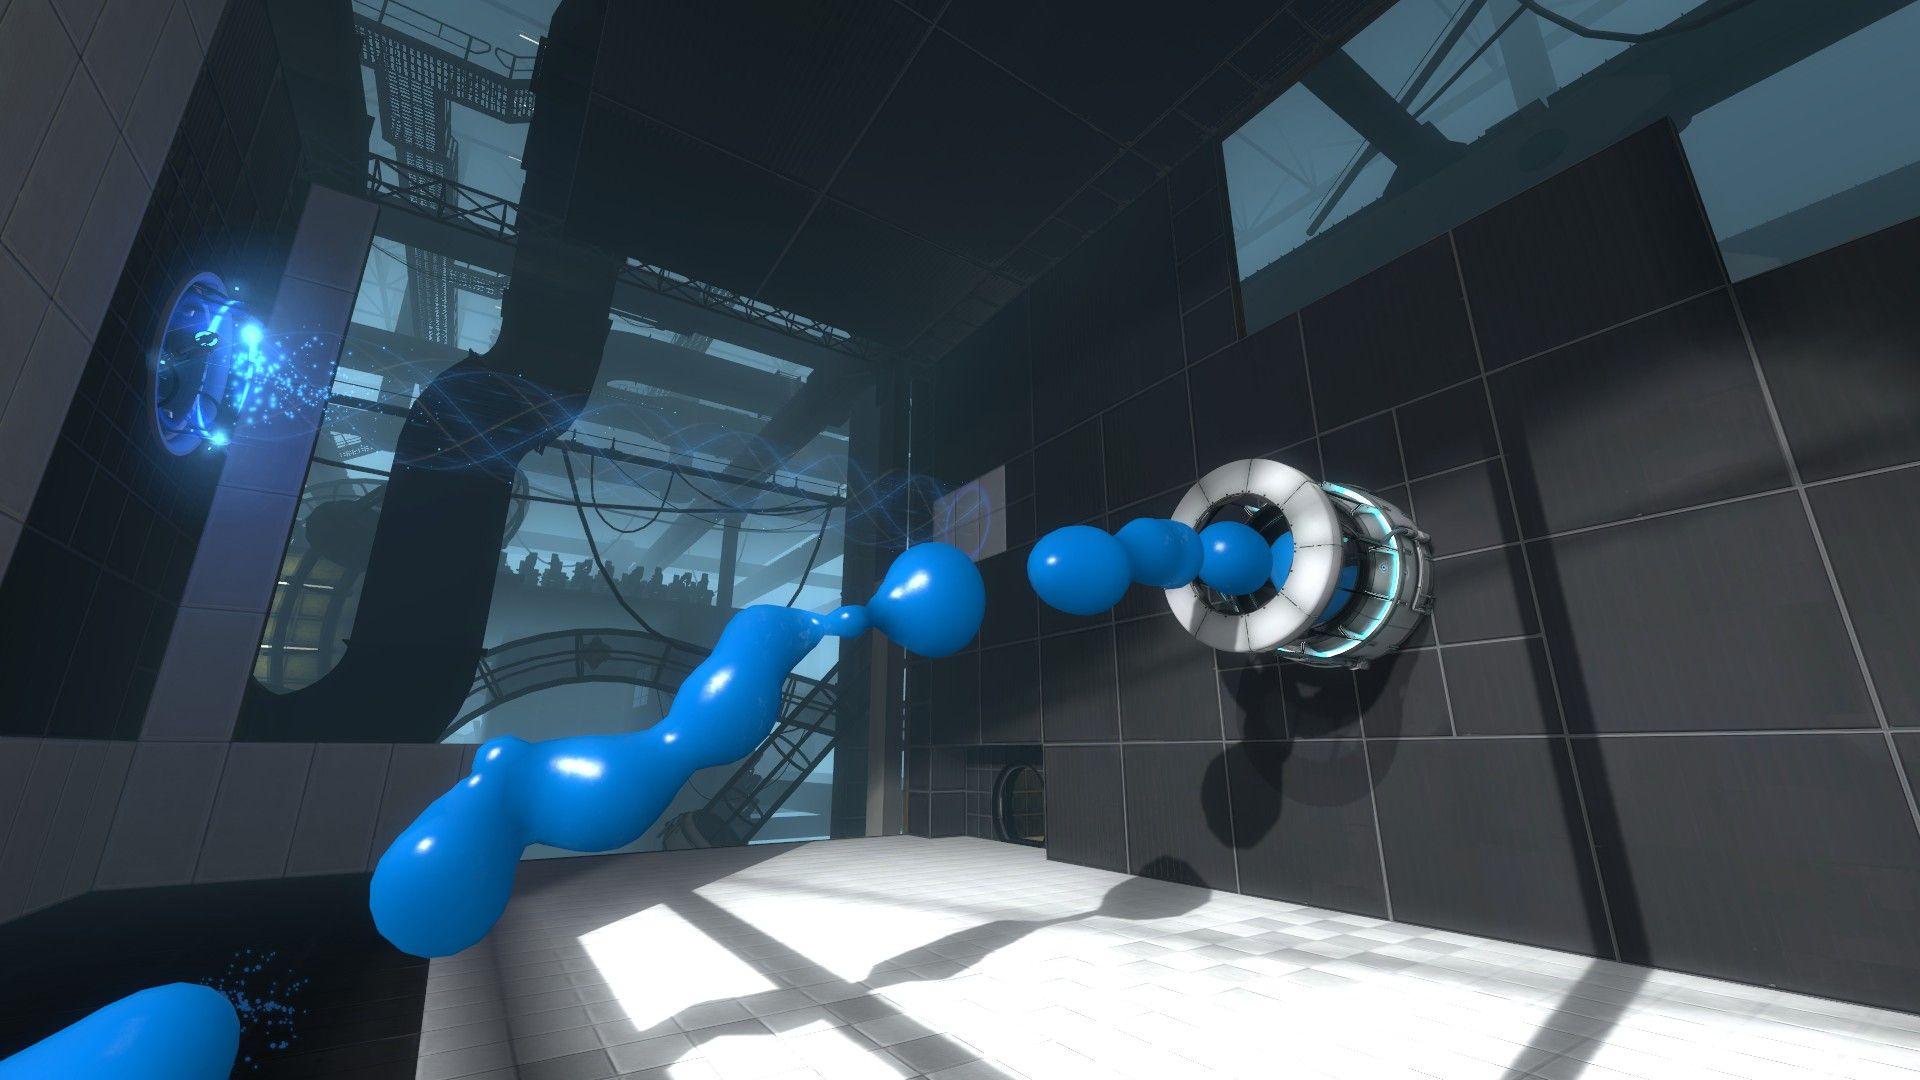 Screenshot №7 from game Portal 2